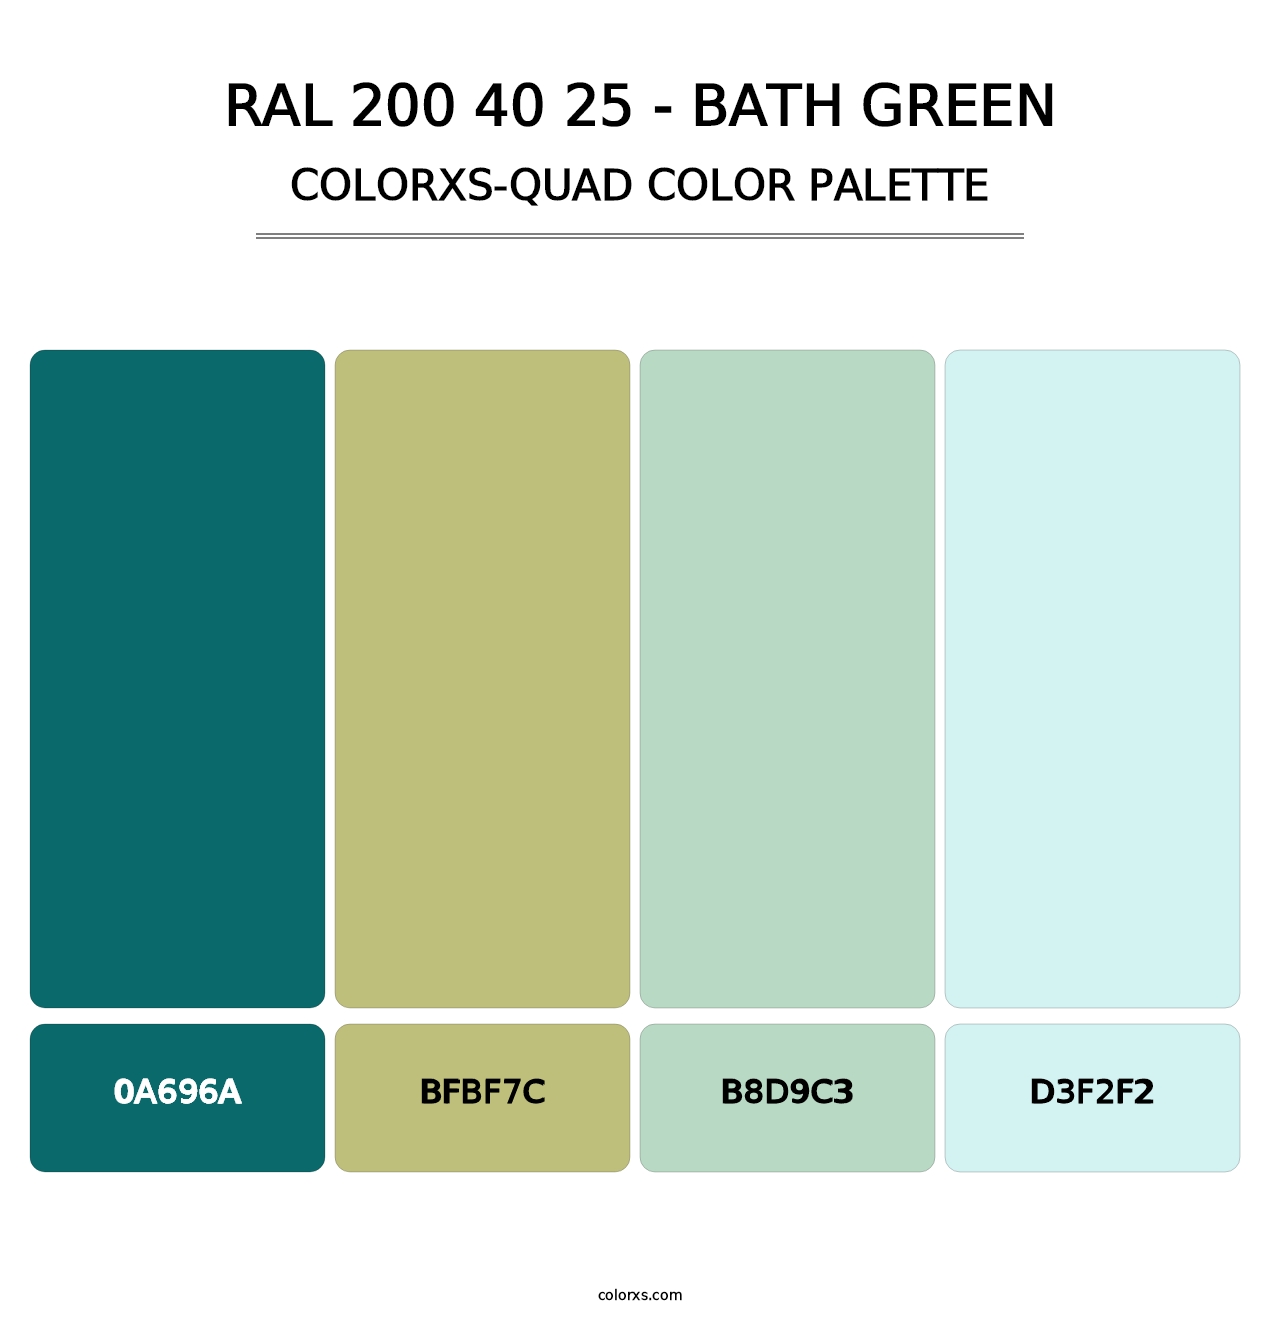 RAL 200 40 25 - Bath Green - Colorxs Quad Palette